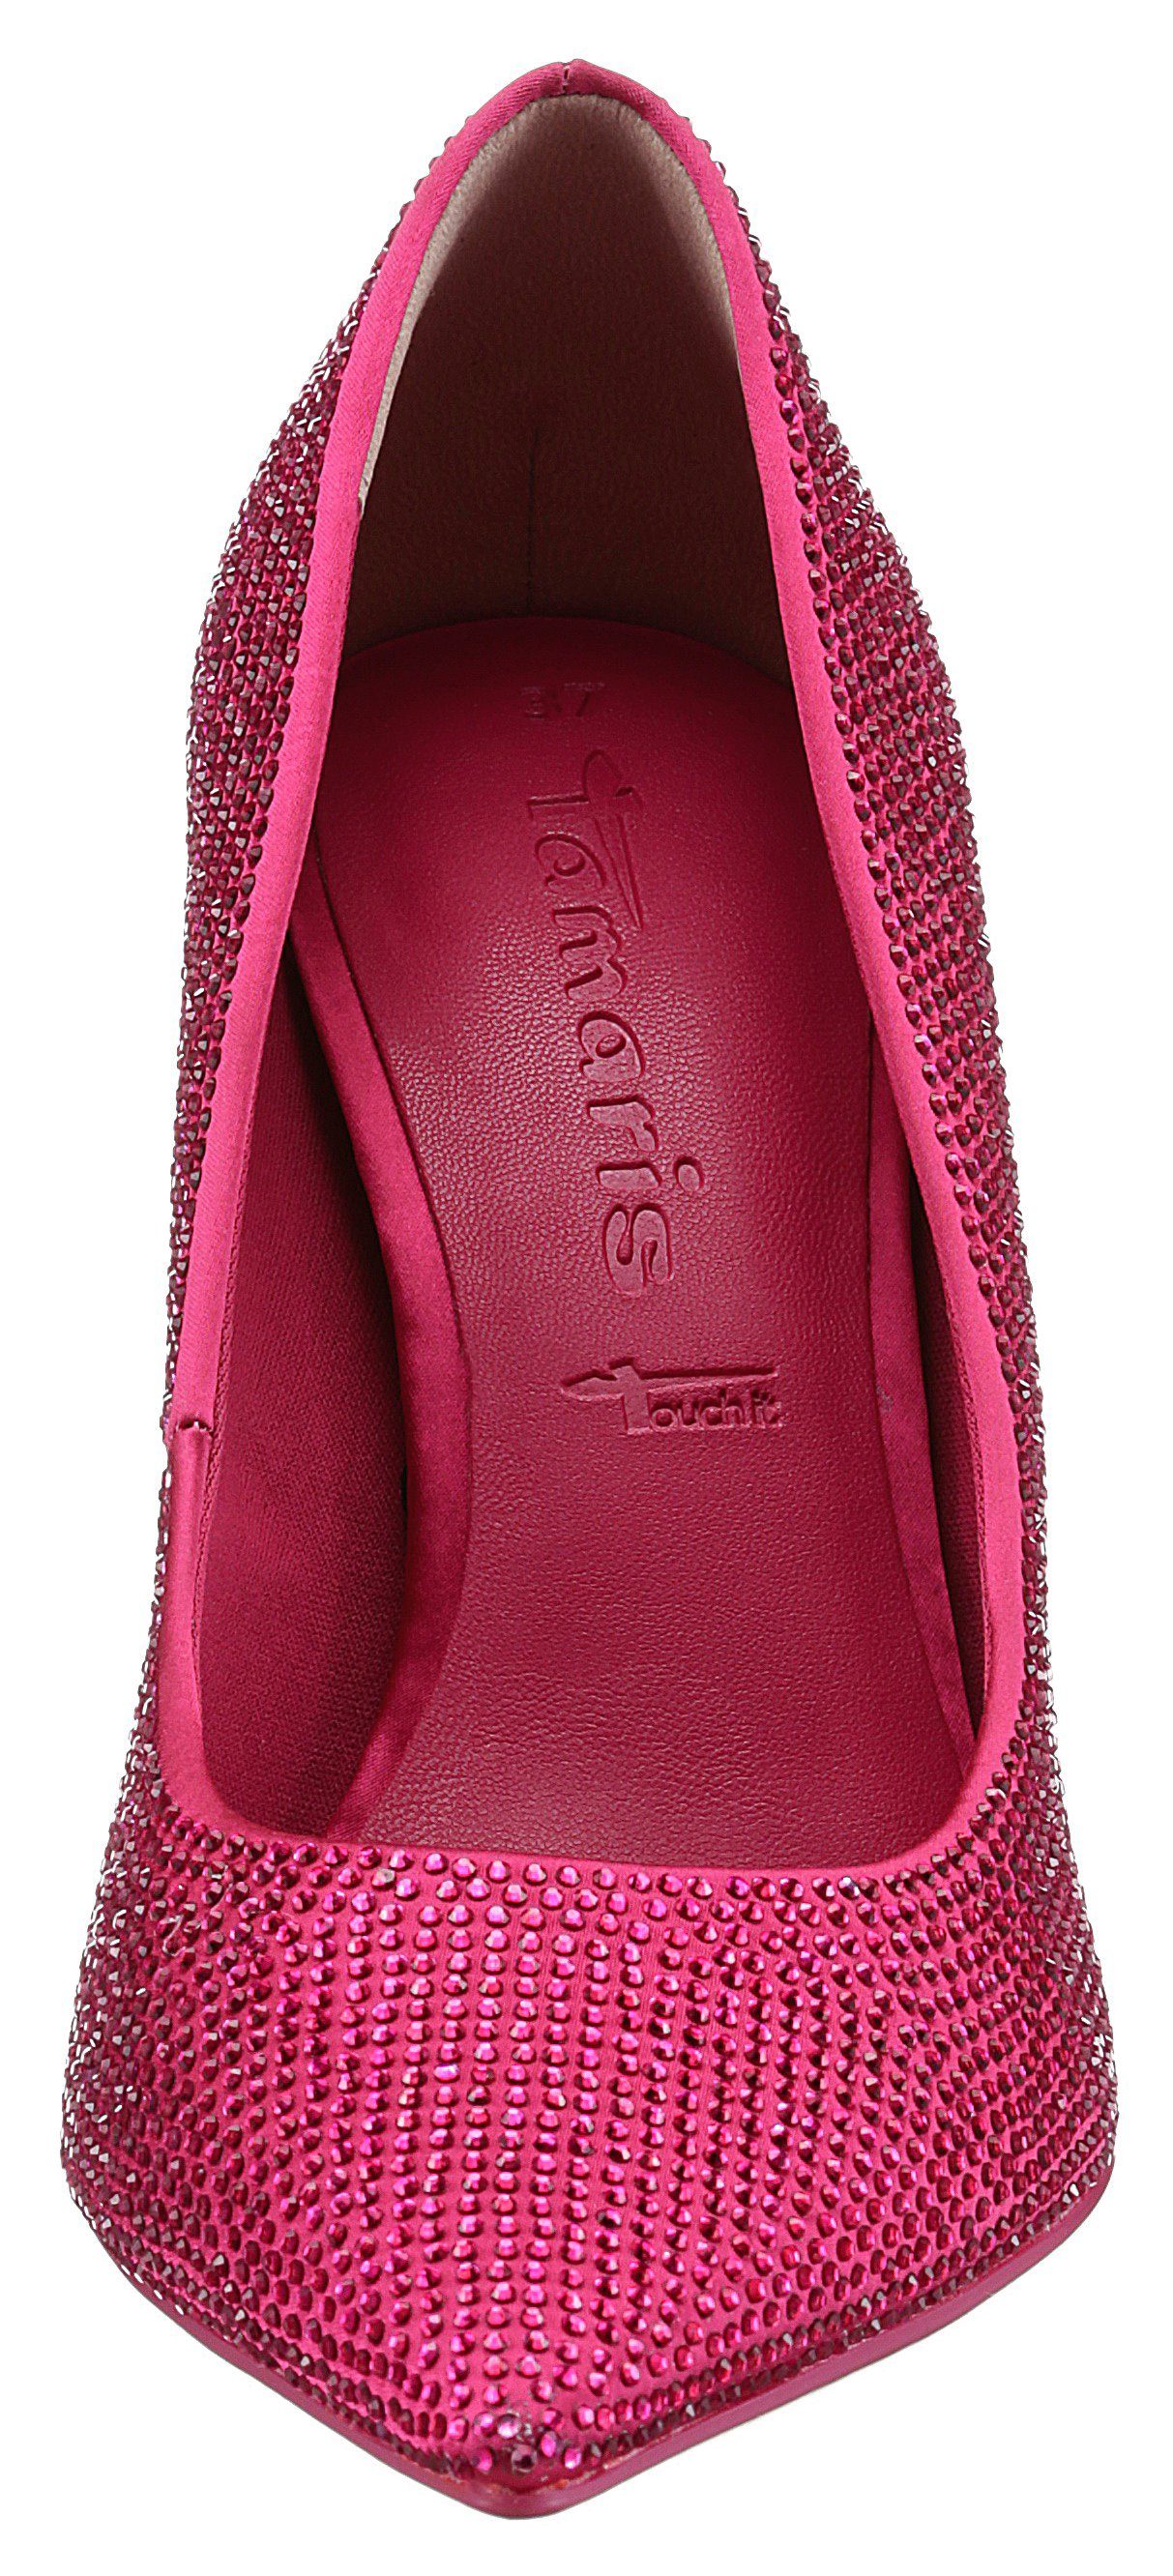 Form in eleganter High-Heel-Pumps pink Tamaris spitzer